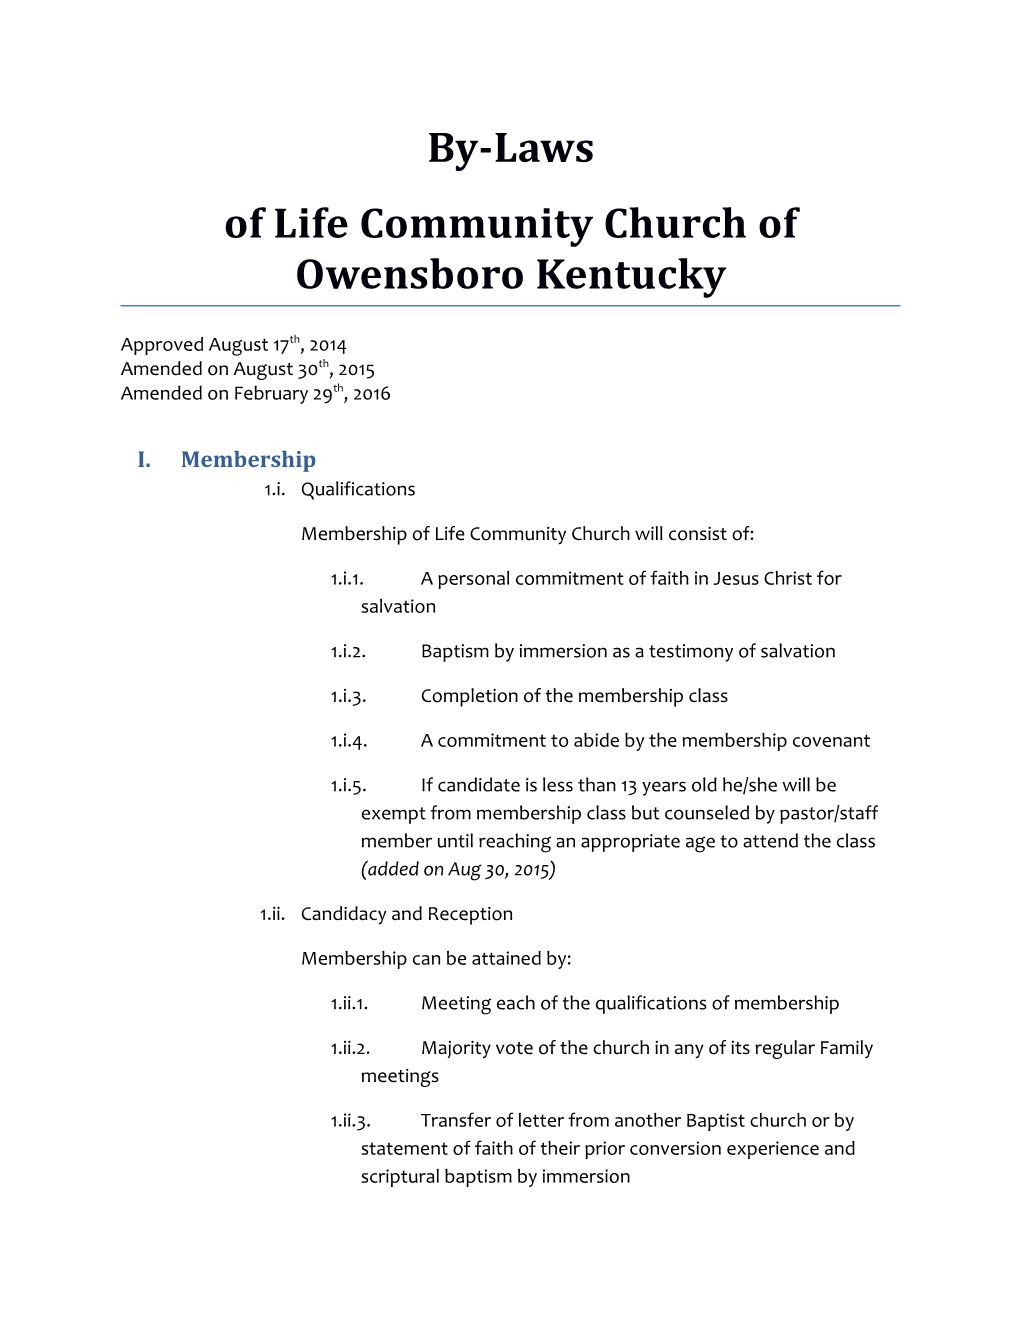 Of Life Community Church of Owensboro Kentucky